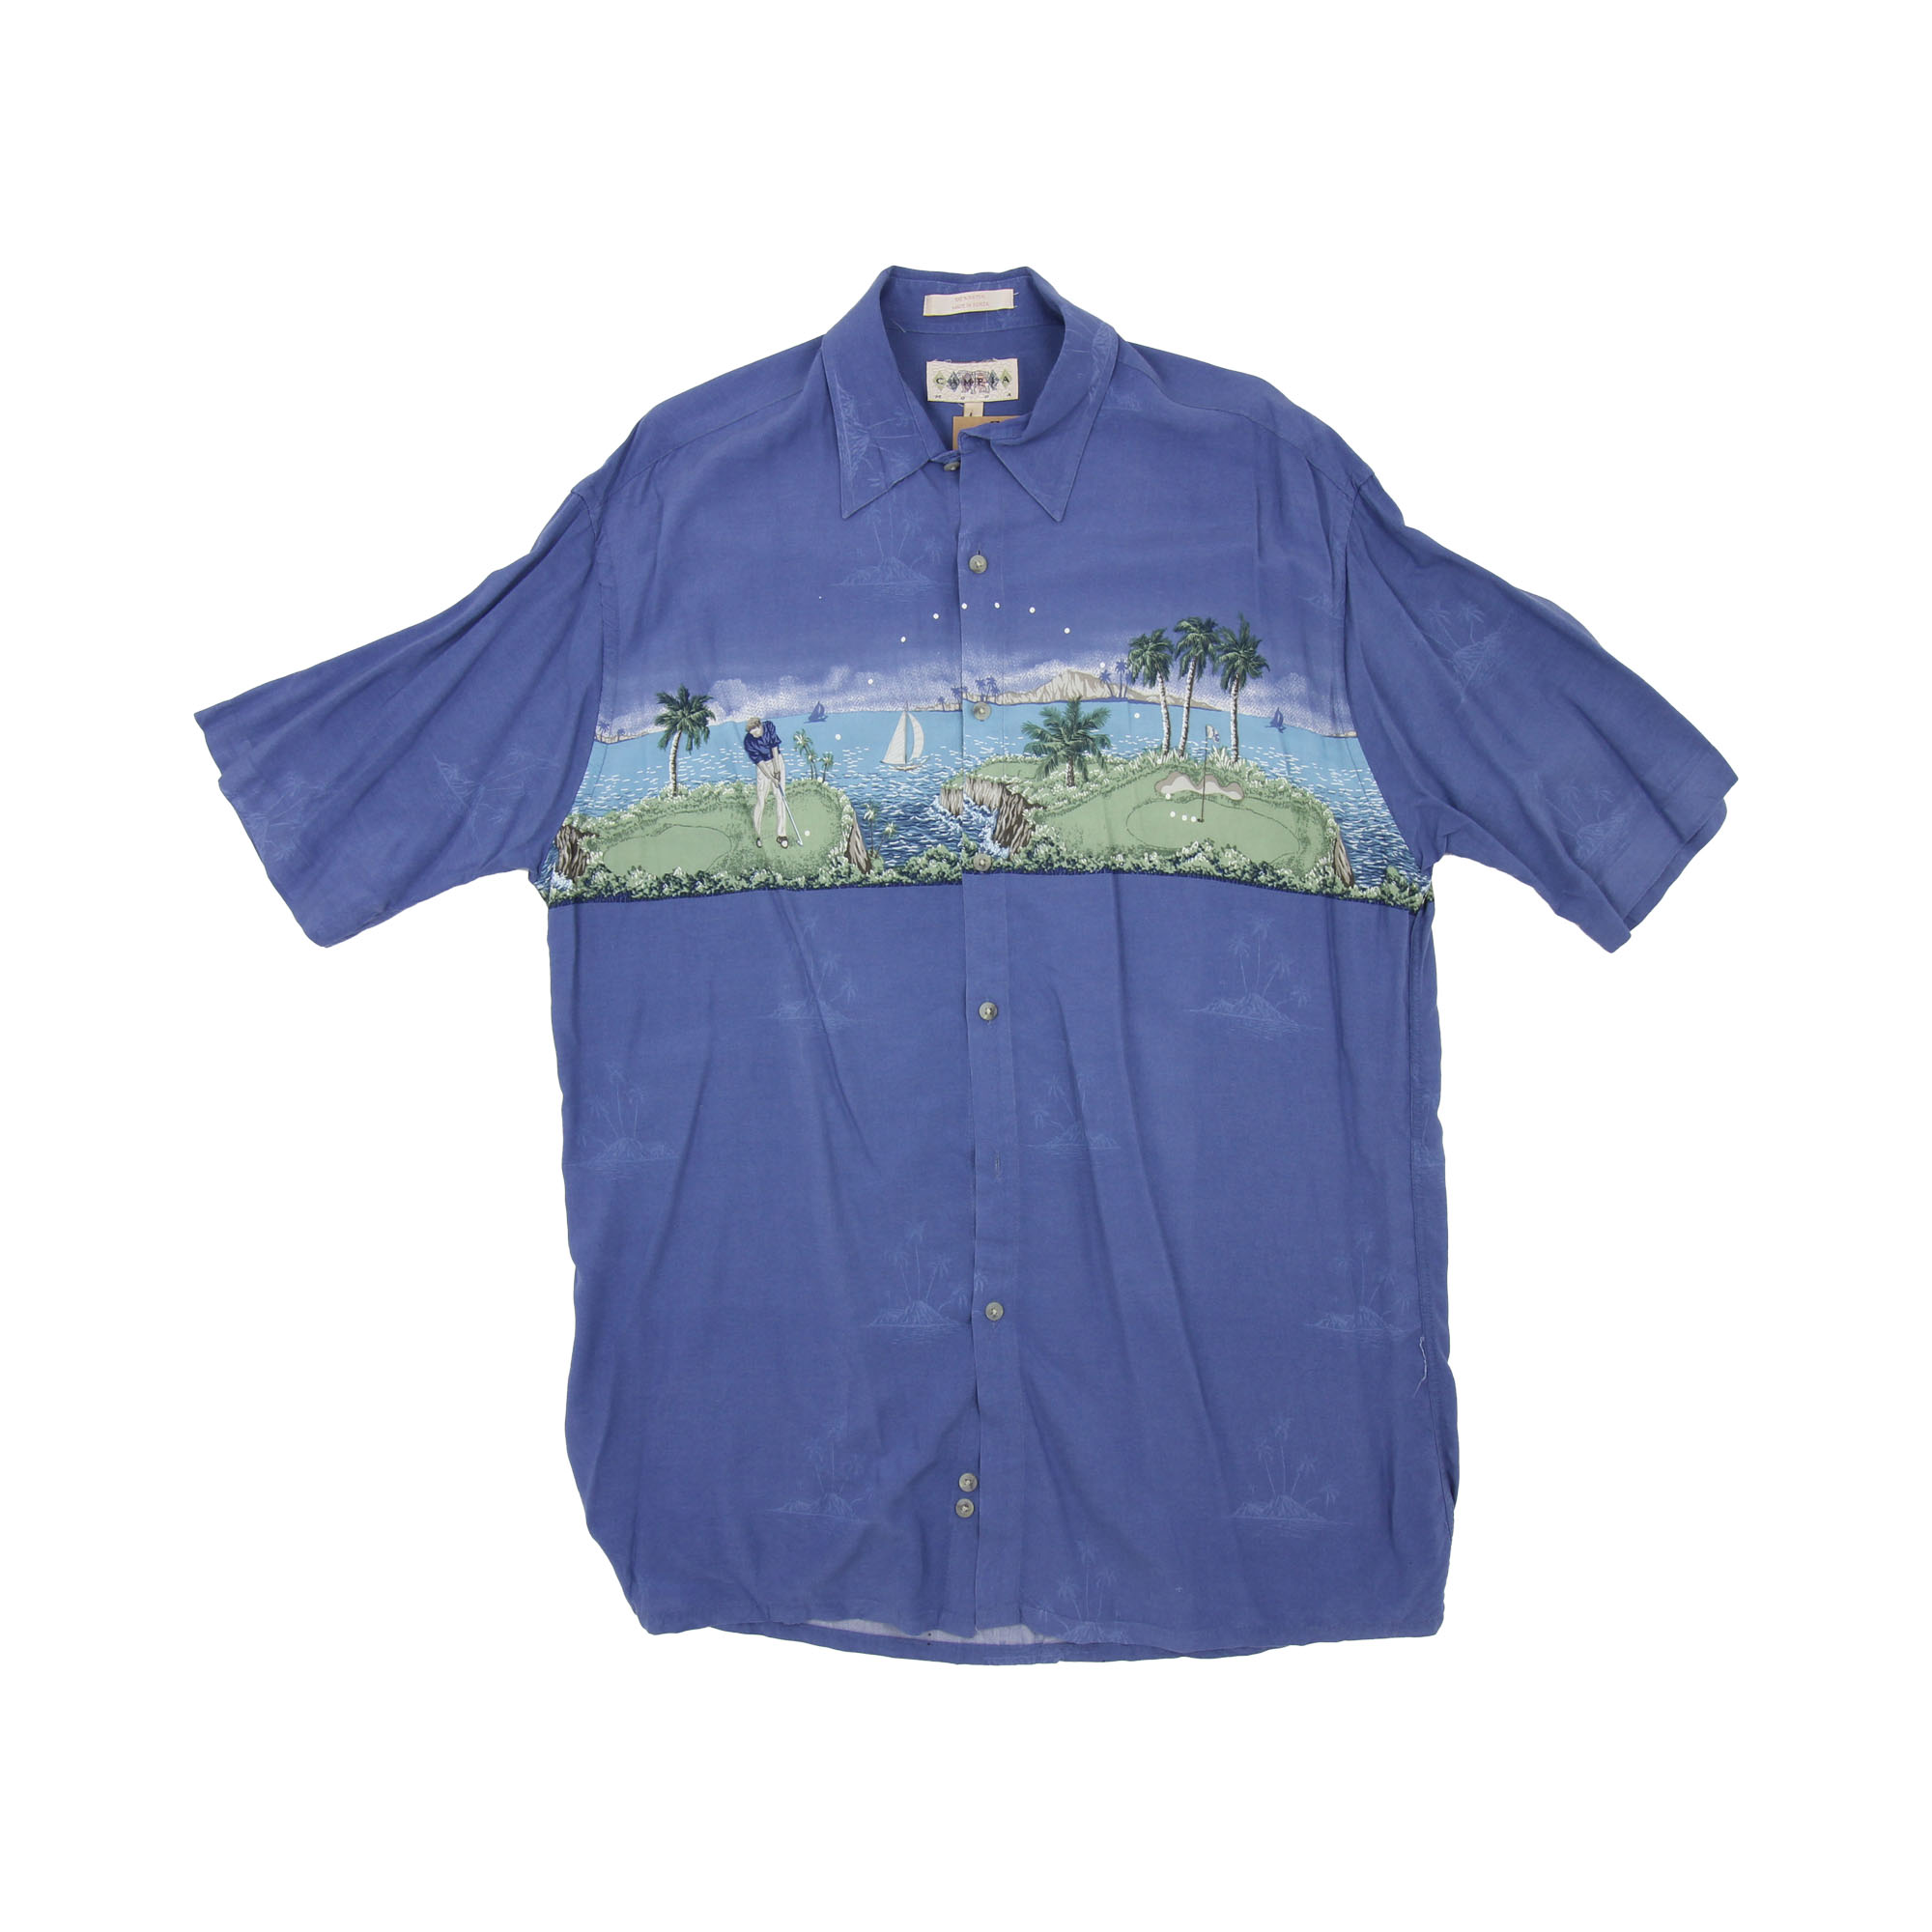 Campia Thin Short Sleeve Shirt -  XL